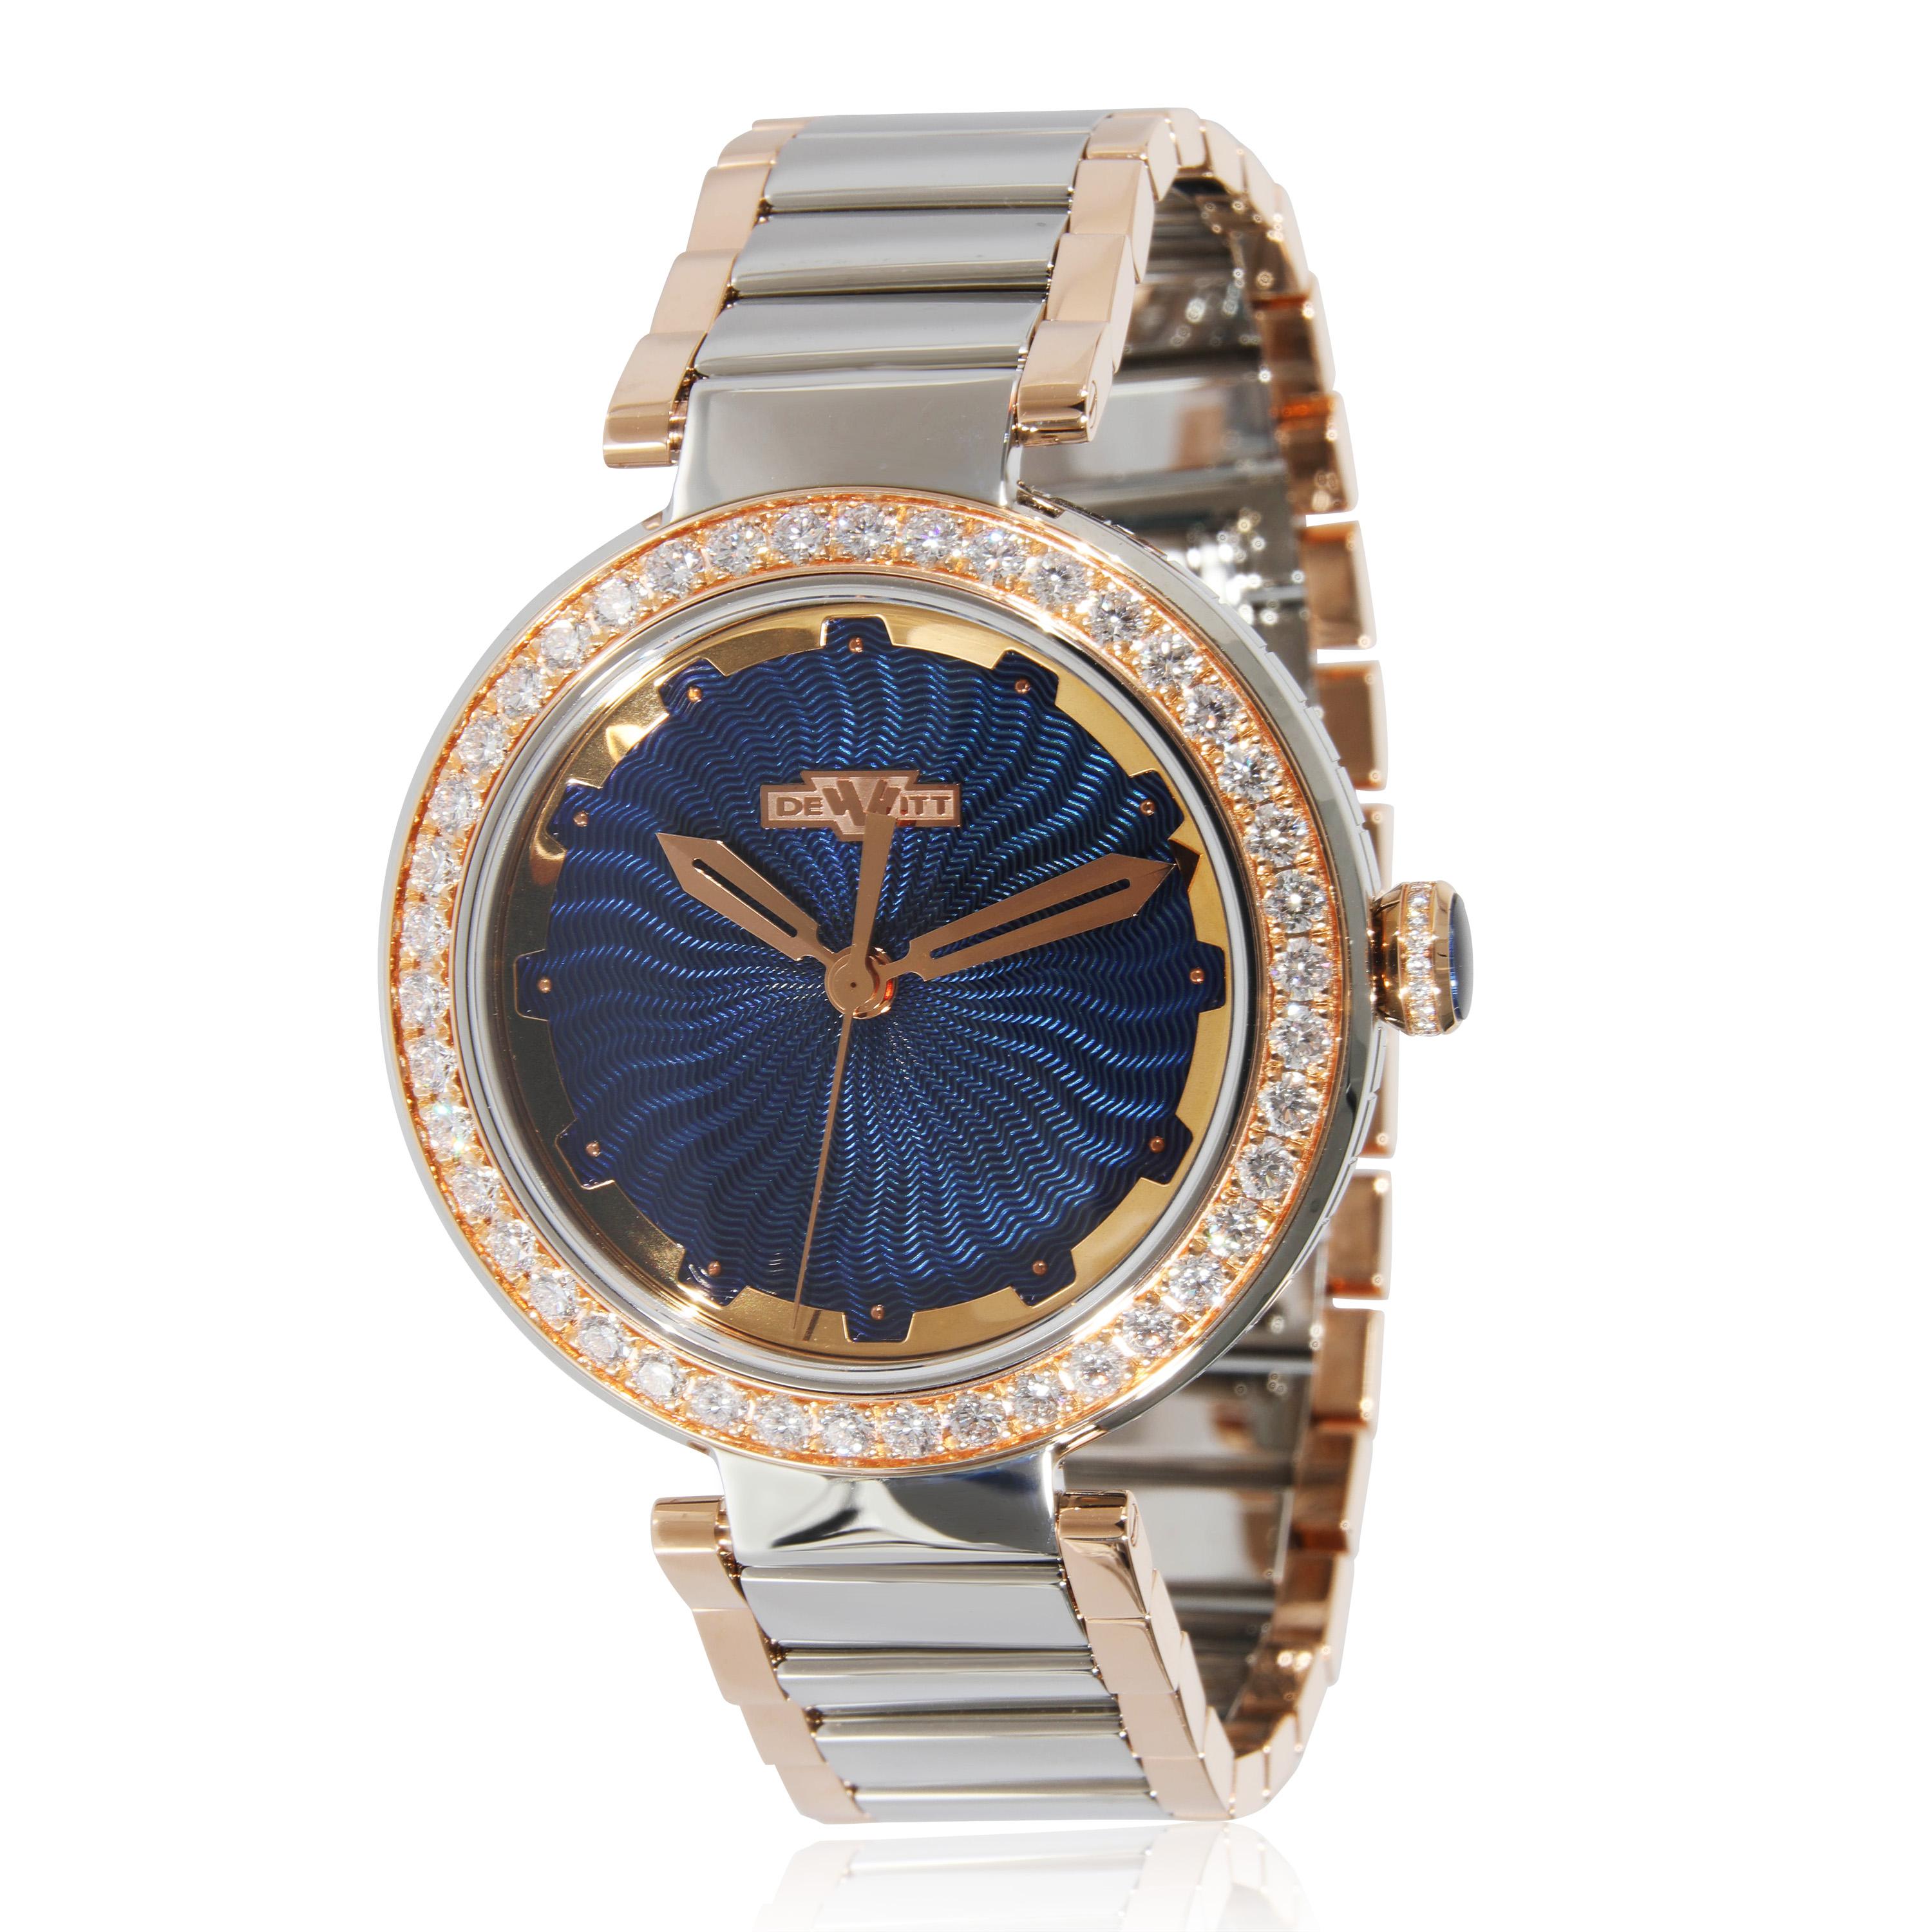 DeWitt Blue Empire BEM.QZ.001 Unisex Watch in 18kt Stainless Steel/Rose Gold For Sale 2